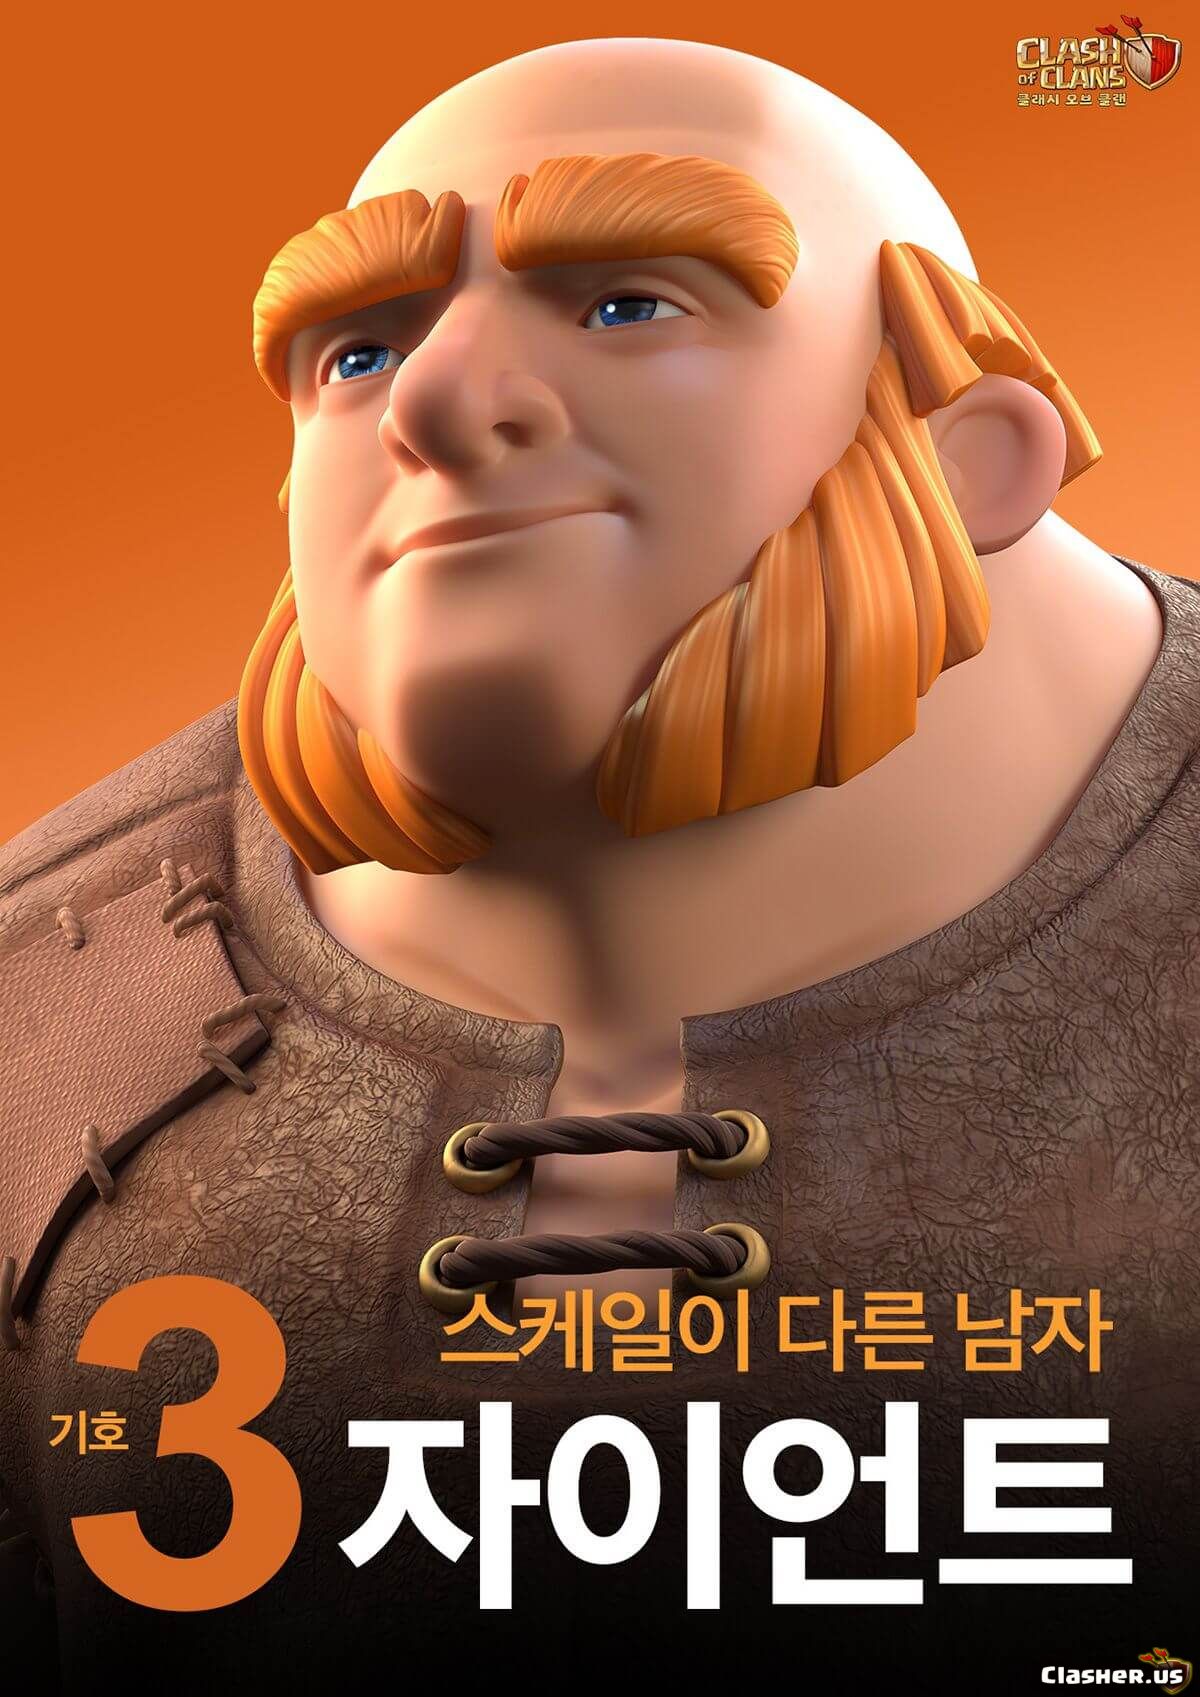 Giant K Handsome [10-2019] - 클래 시 로얄 기호 - HD Wallpaper 